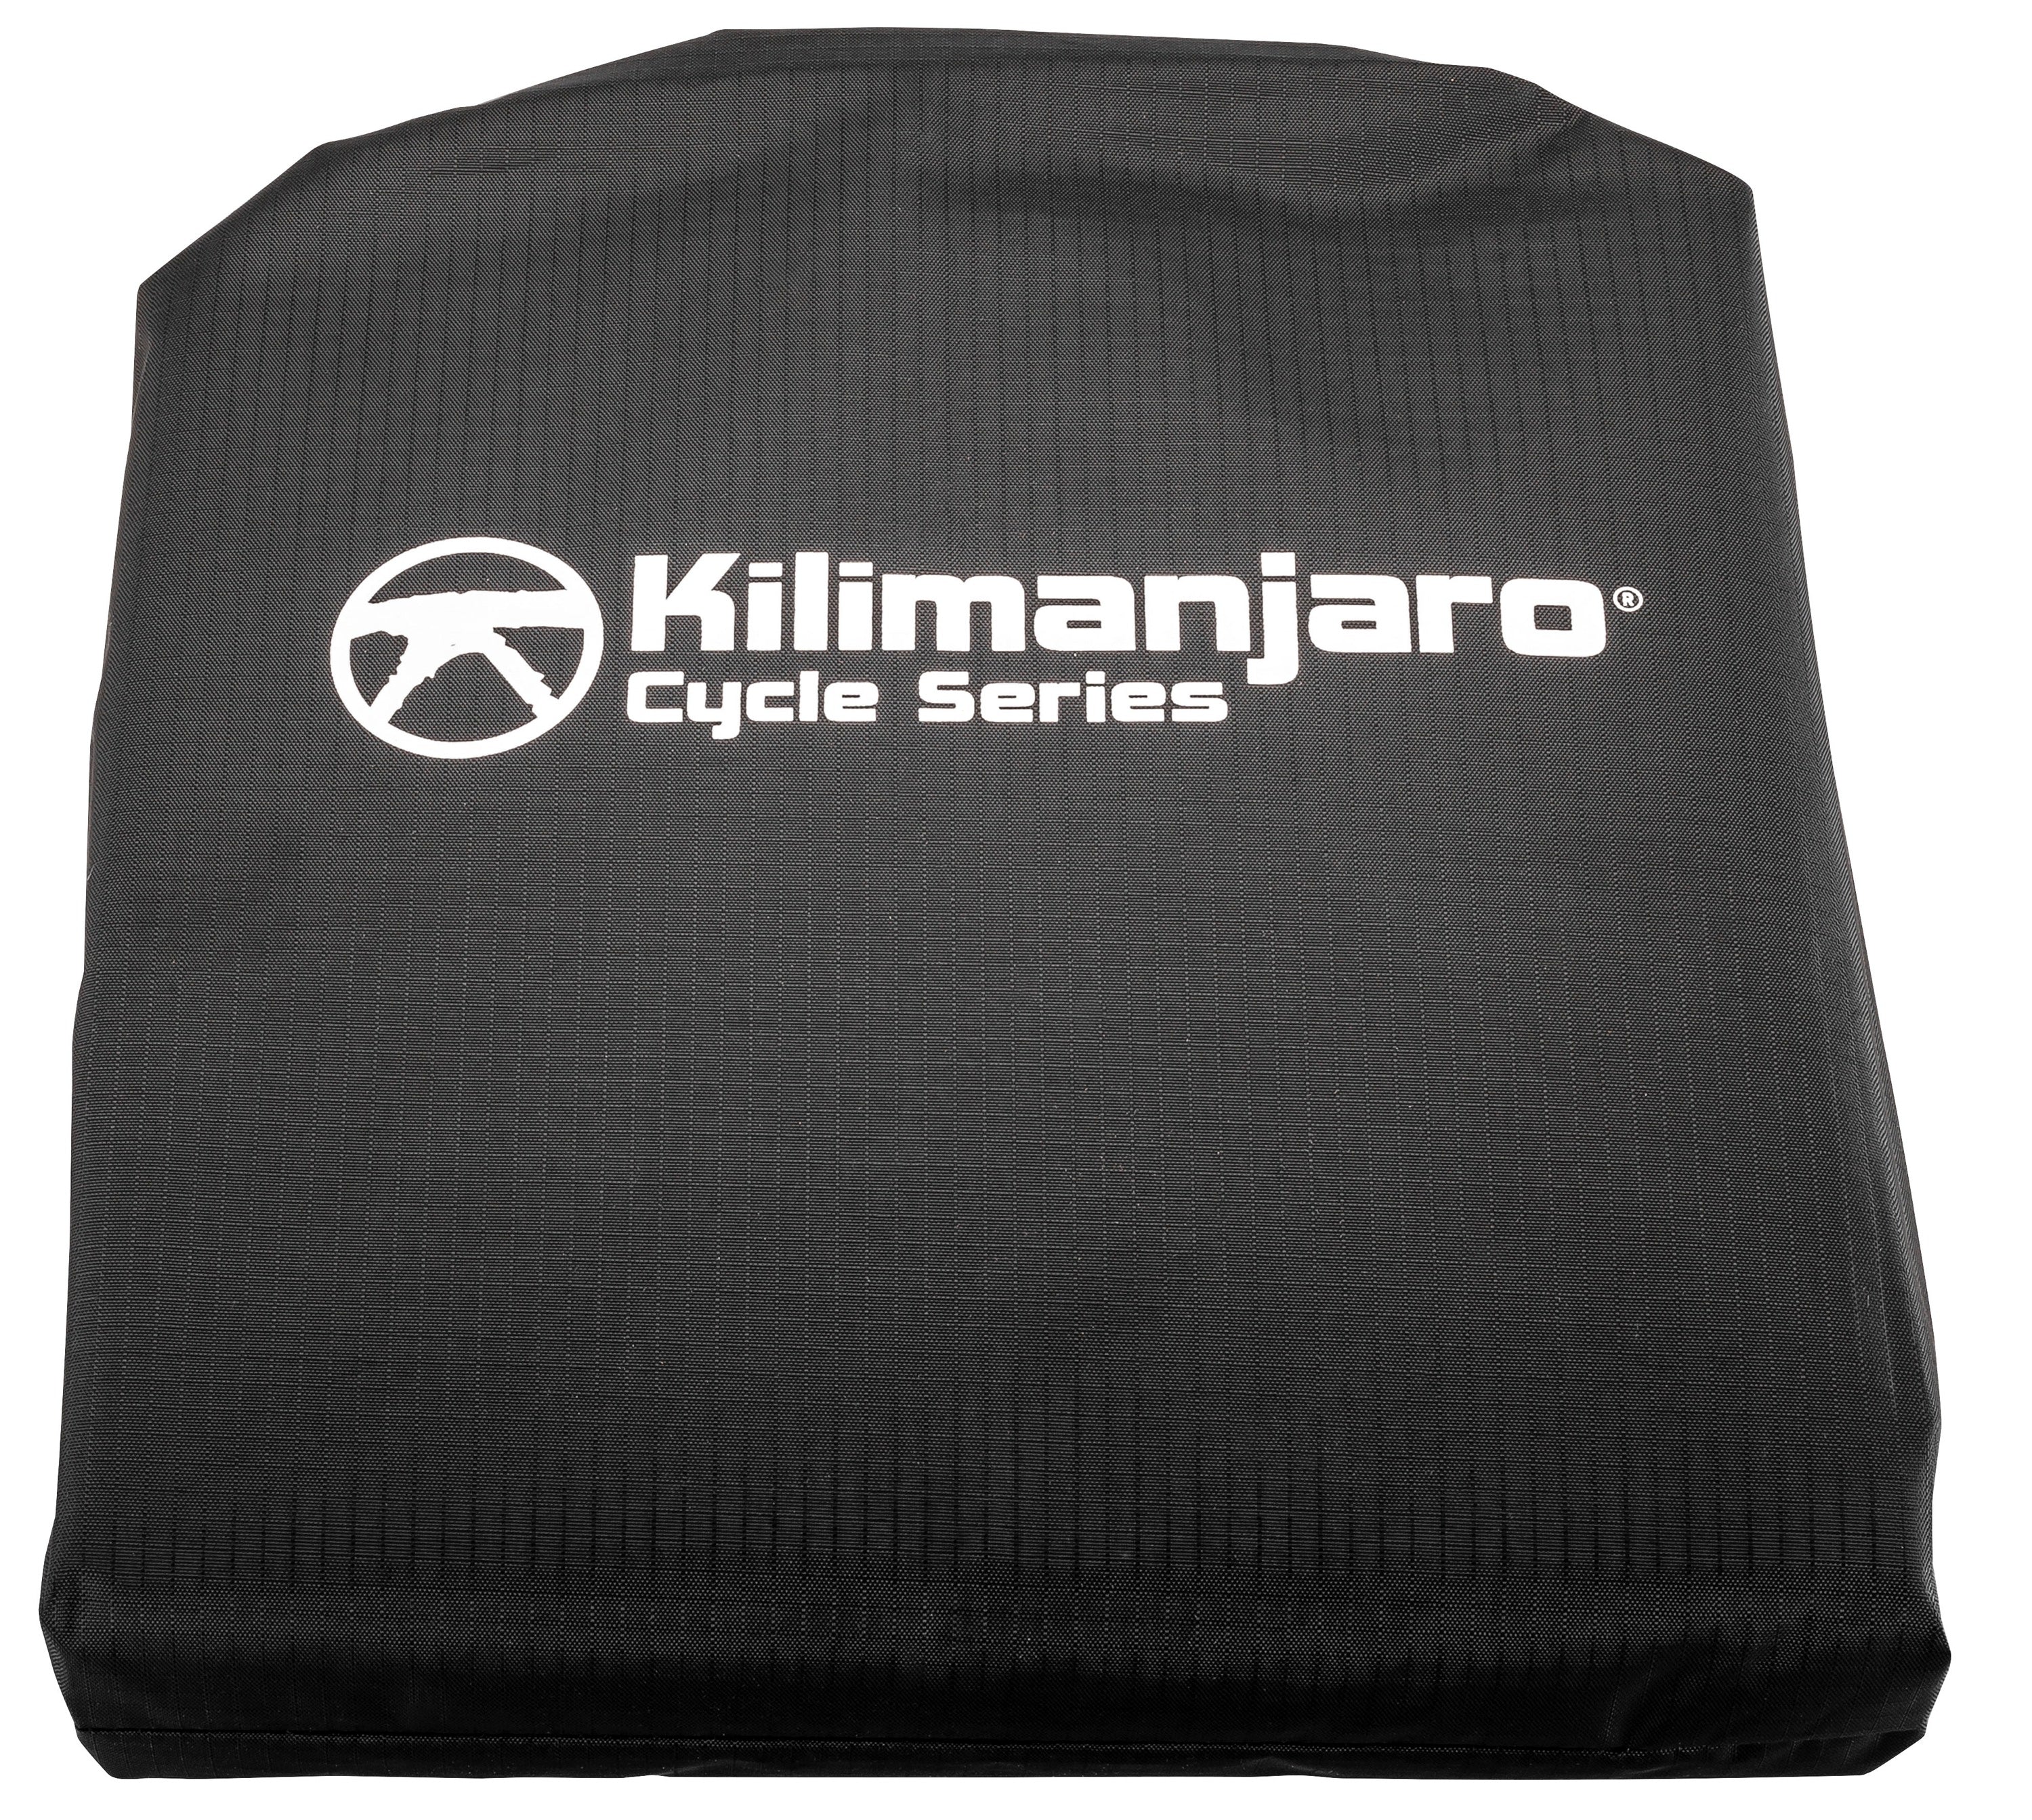 Kilimanjaro Bicycle Storage Cover - 910536ECE